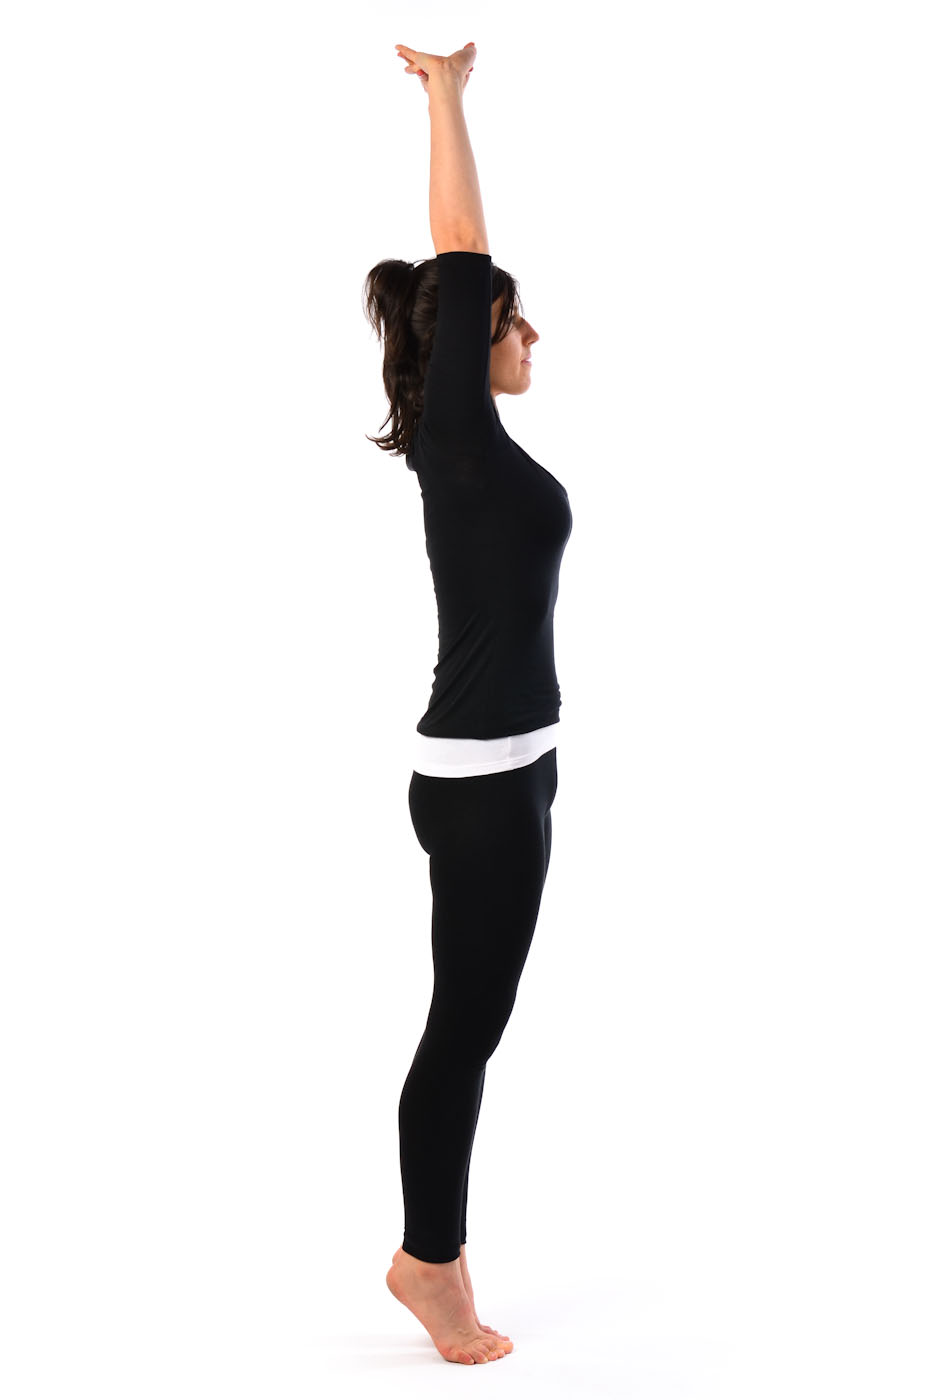 Tadasana Yoga | Palm Tree Pose | Steps | Benefits | Yogic Fitness - YouTube